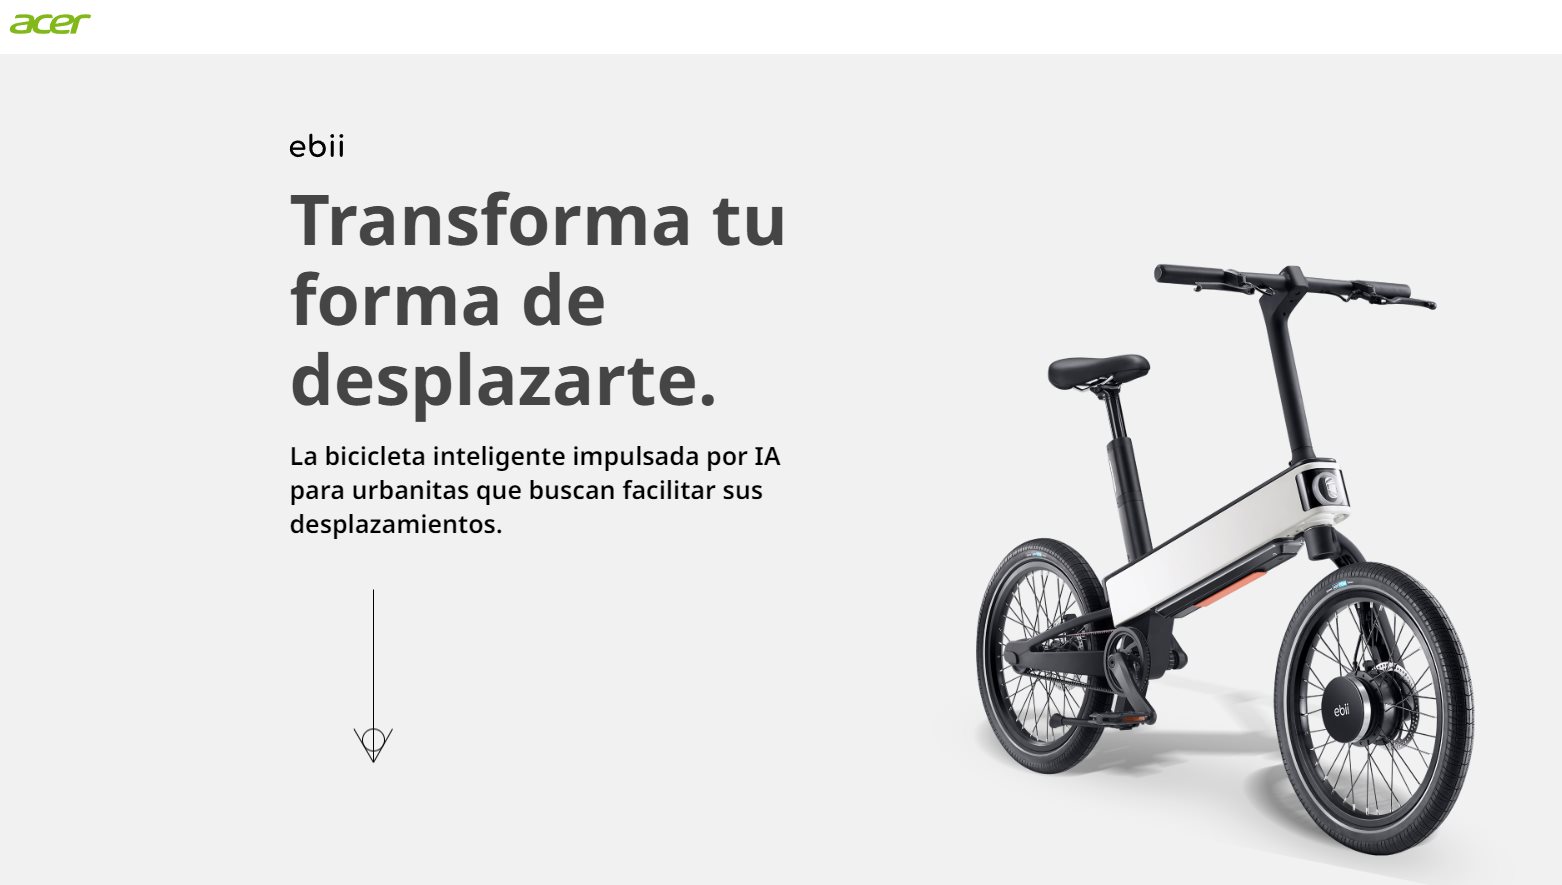 Acer presenta una e-bike, la ebii